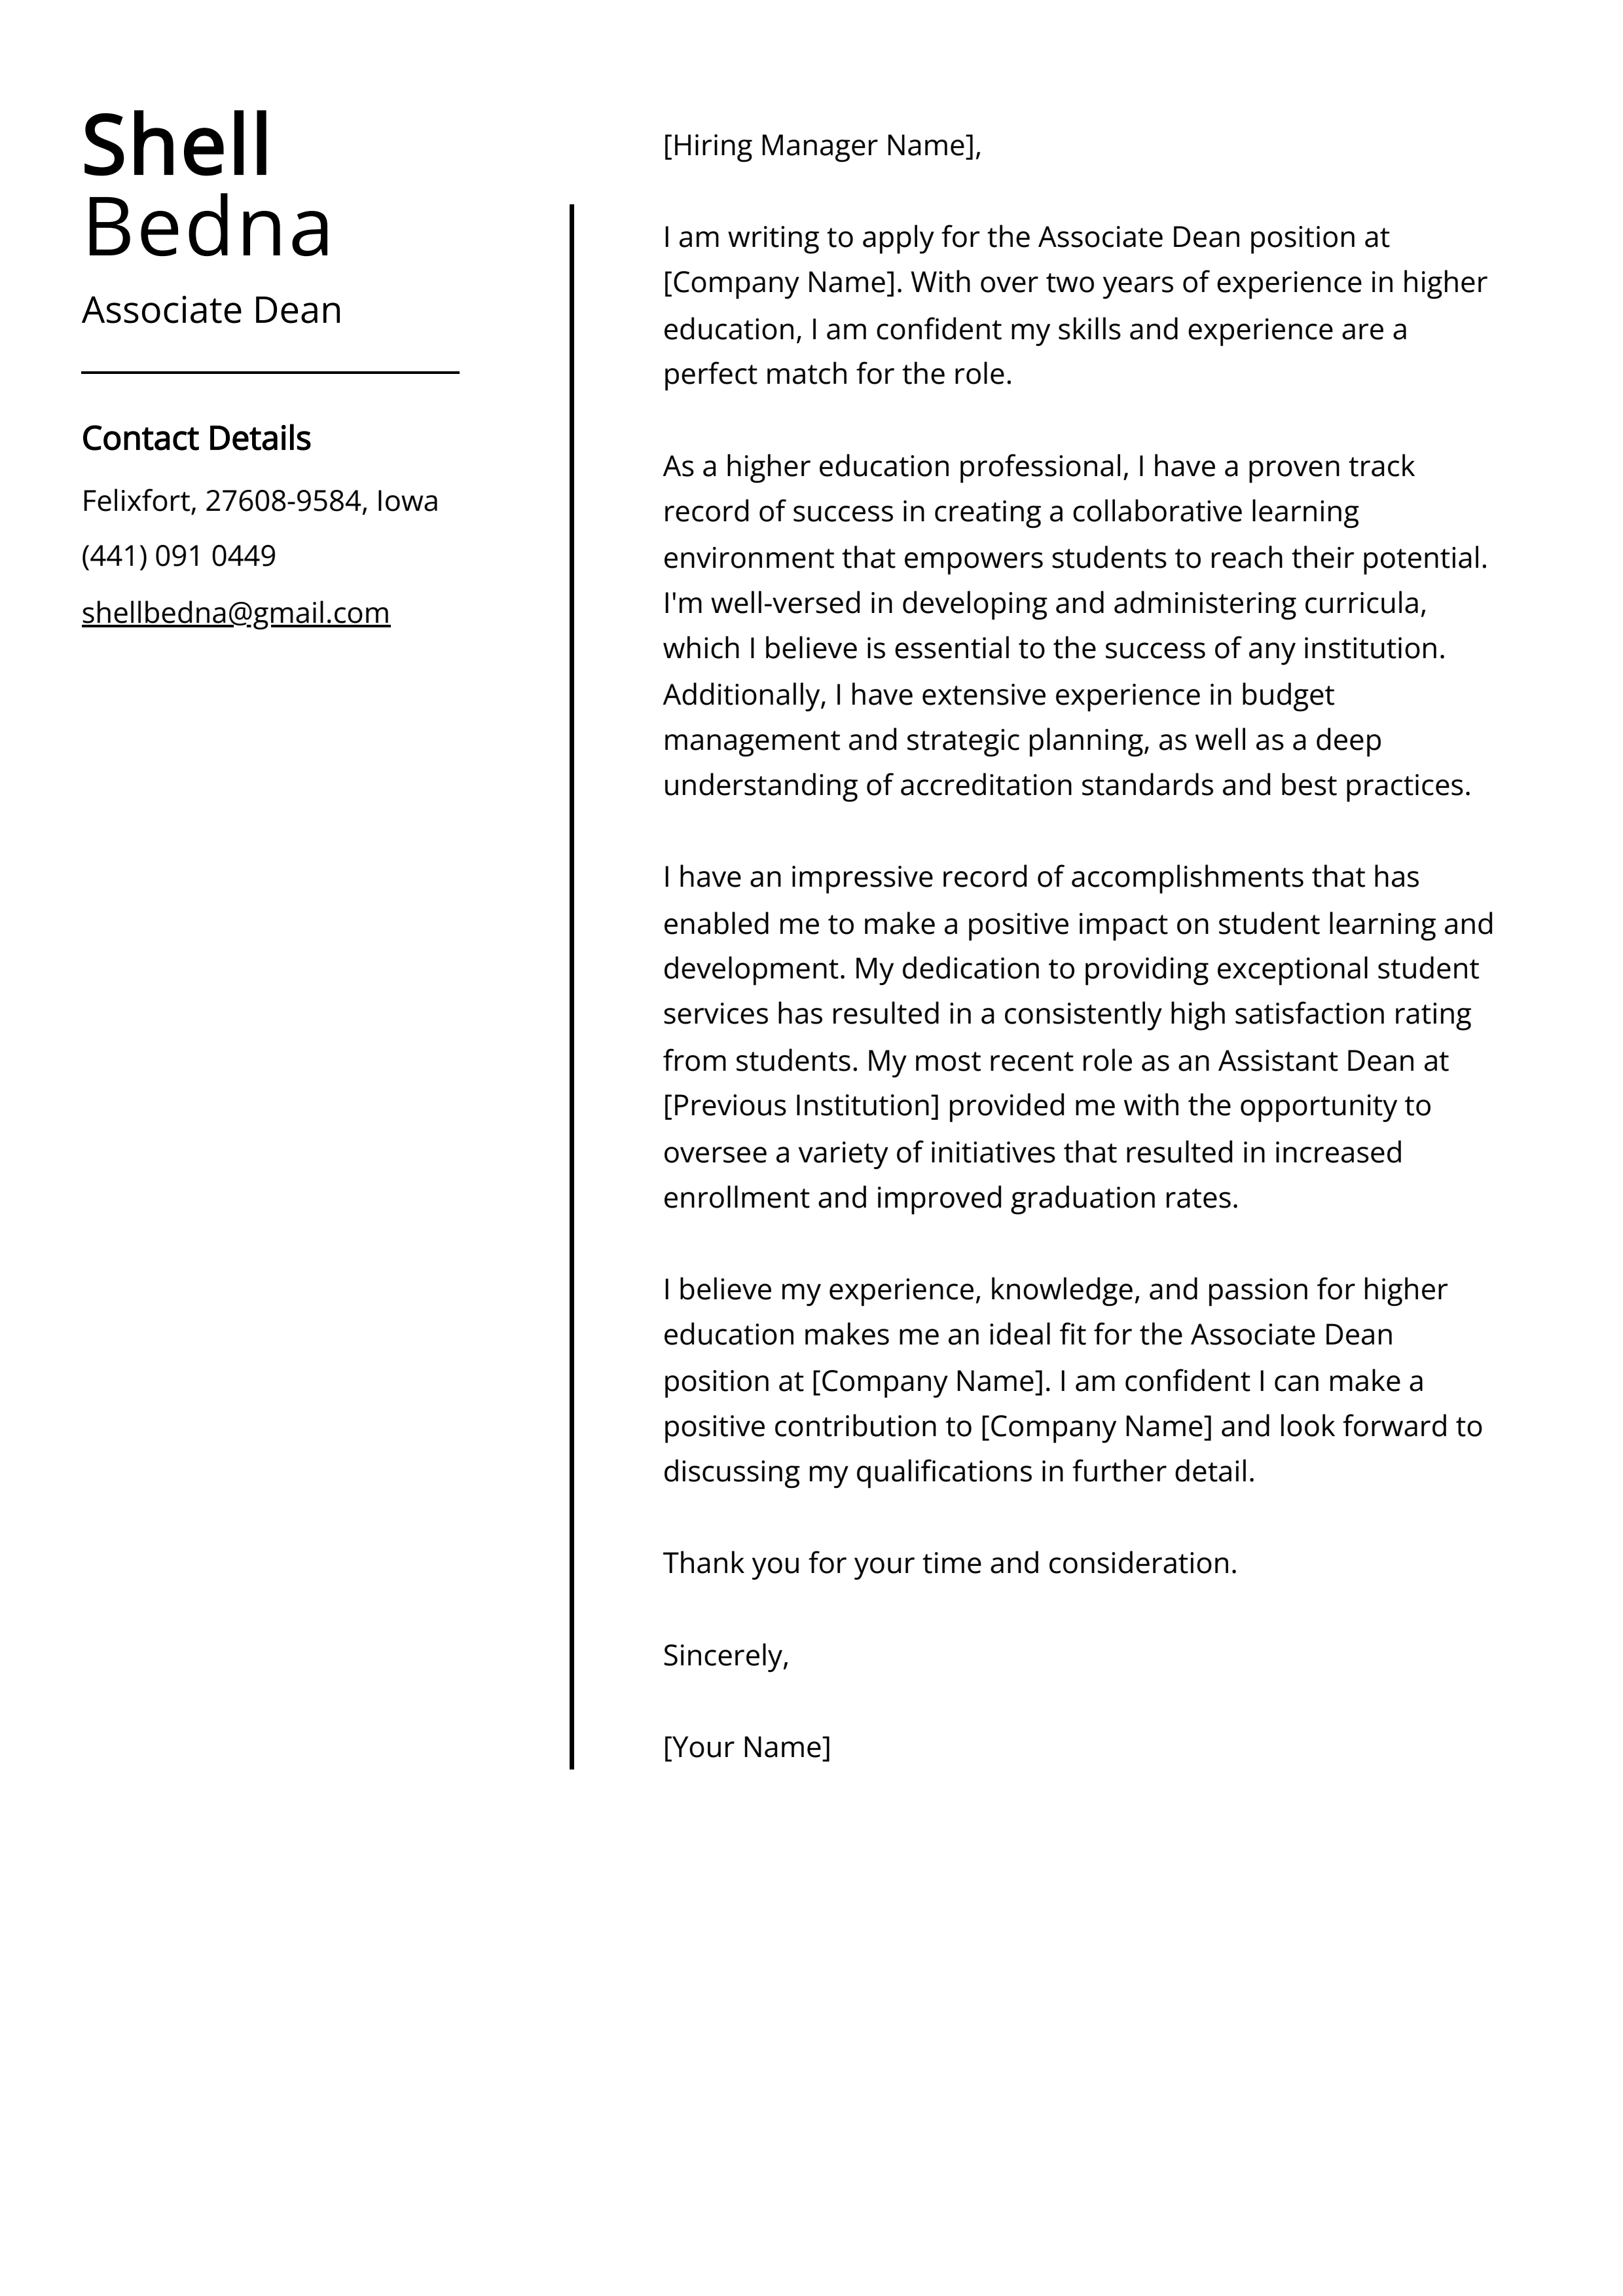 Associate Dean Cover Letter Example